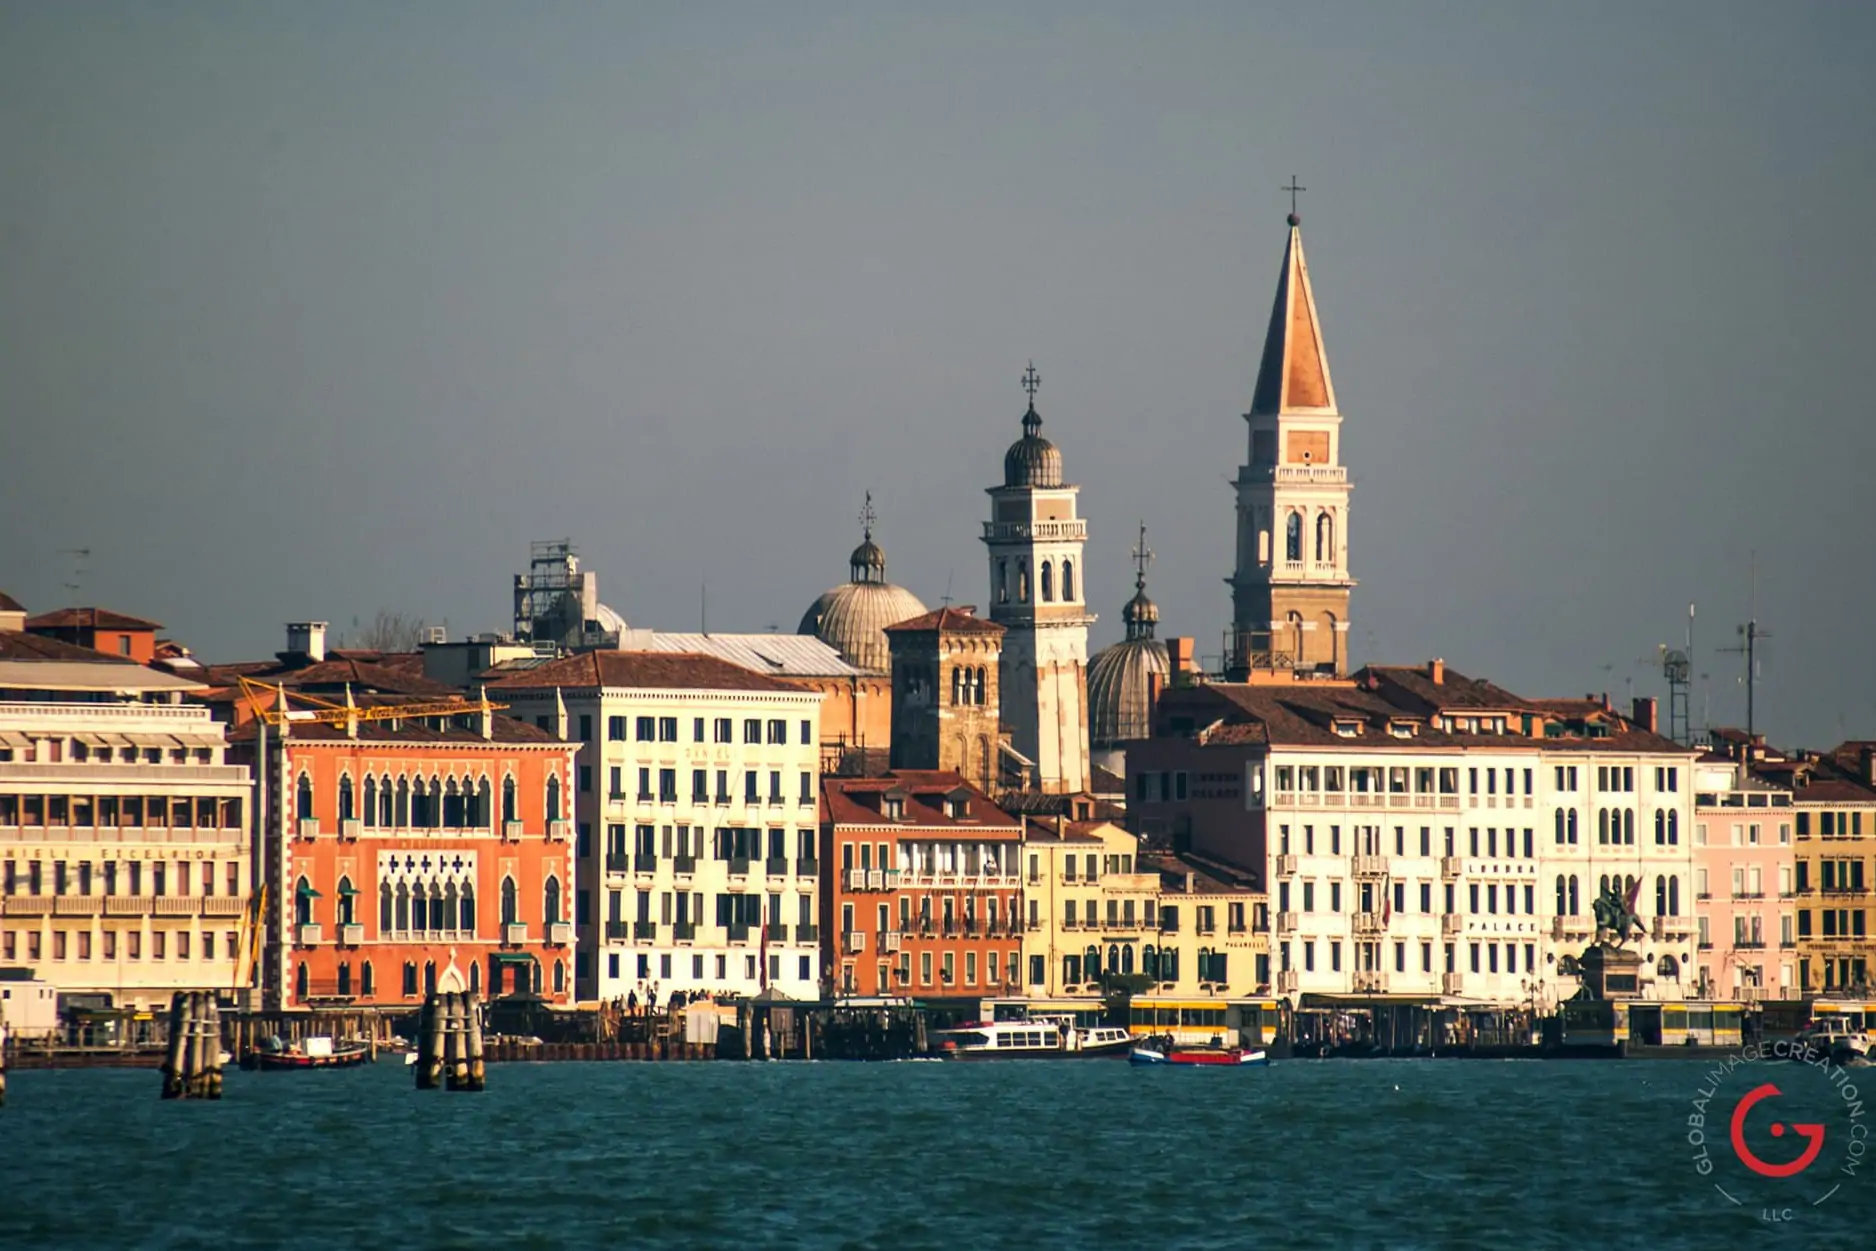 Luxury Hotel Danieli in the Venice Skyline from the Venetian Lagoon